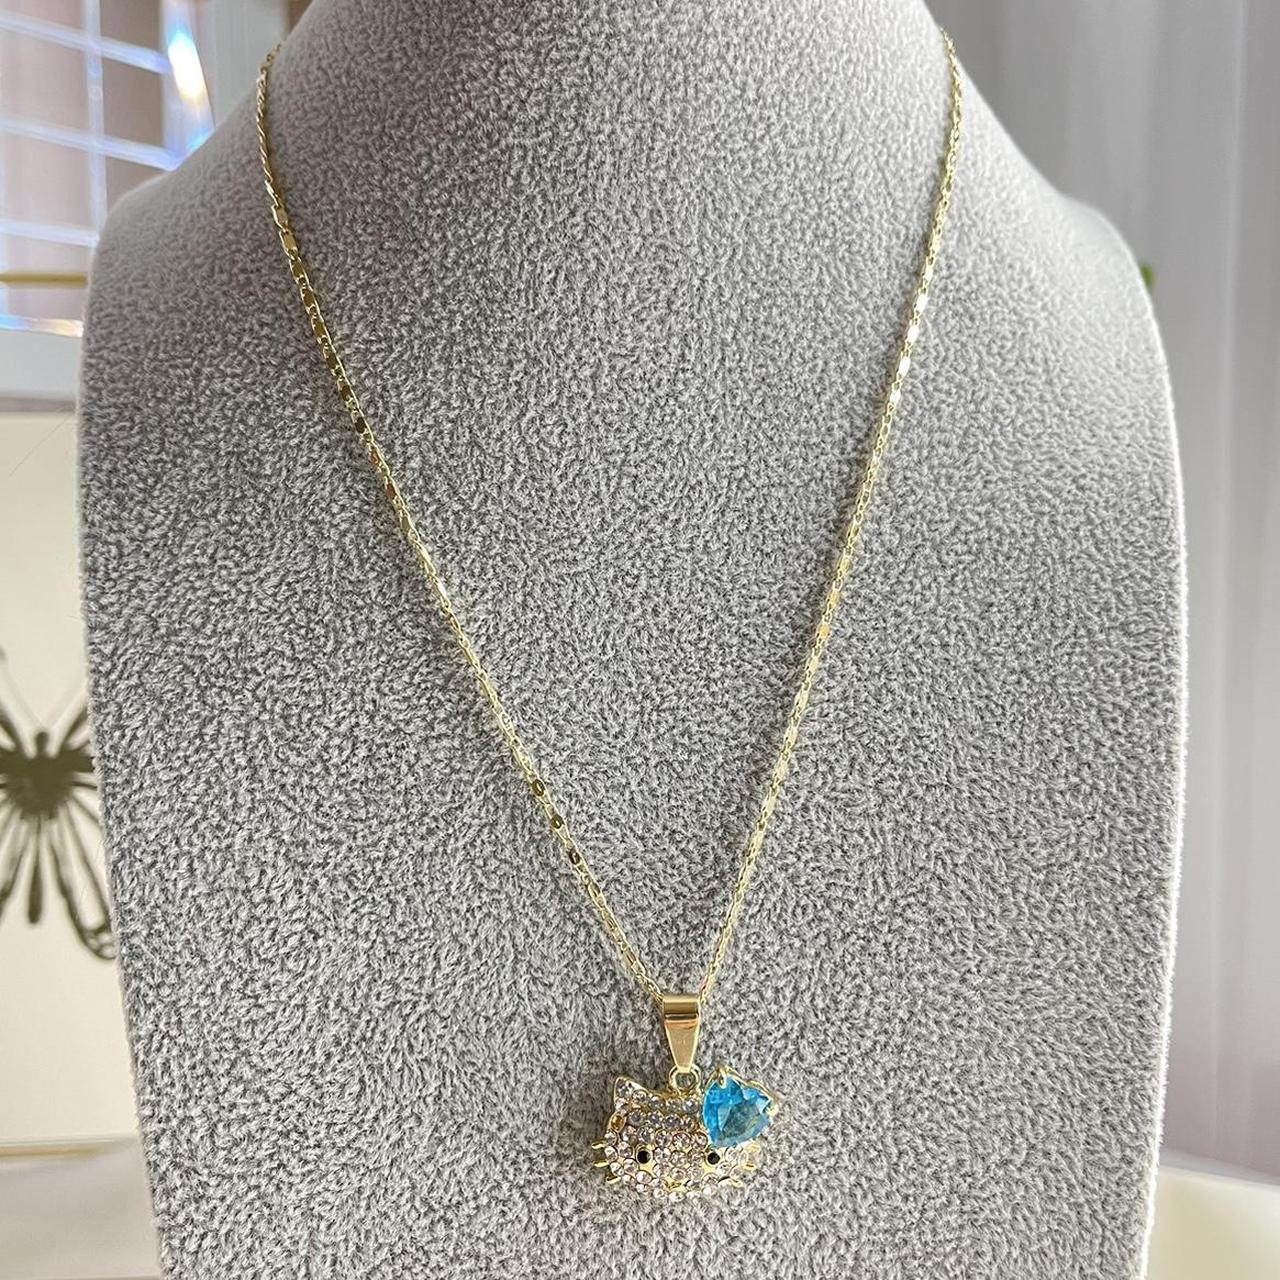 Kitty Pendant Necklace - Trendy Kitty necklace Gold tone - Walmart.com